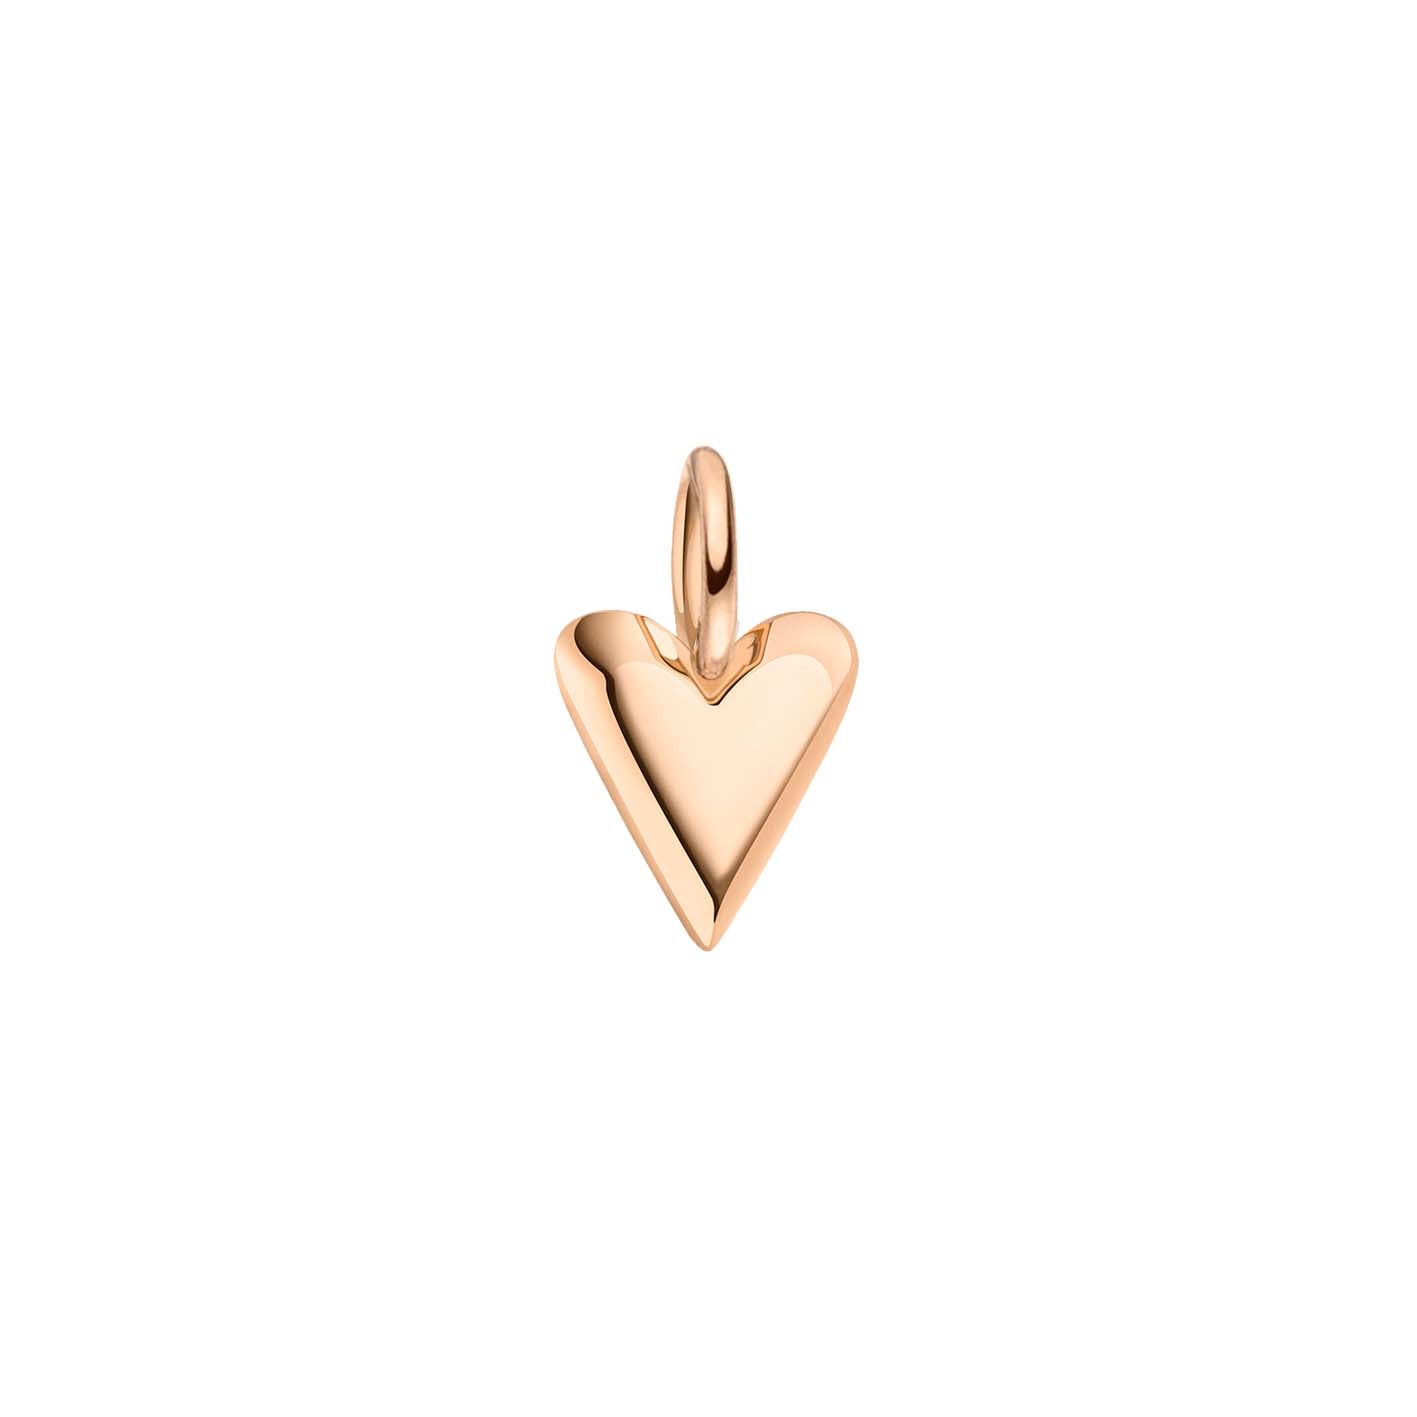 Be my Heart: heart pendant